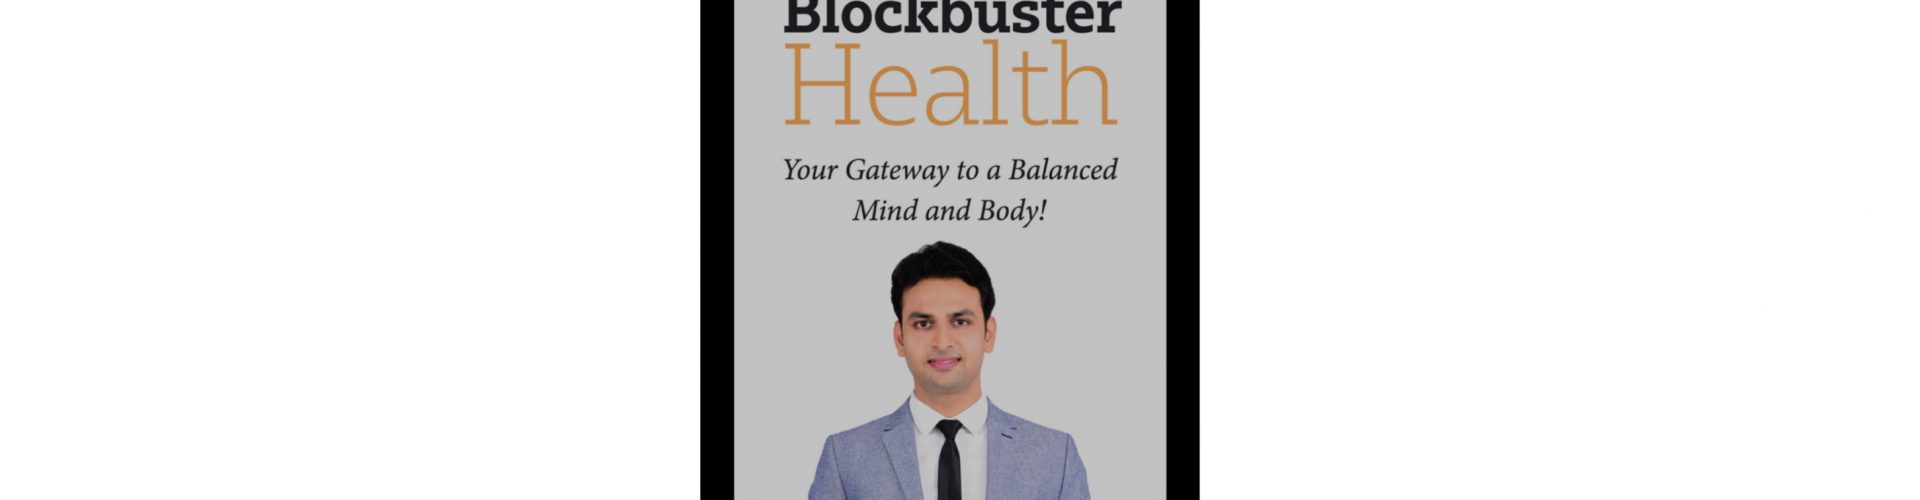 The Blockbuster Health